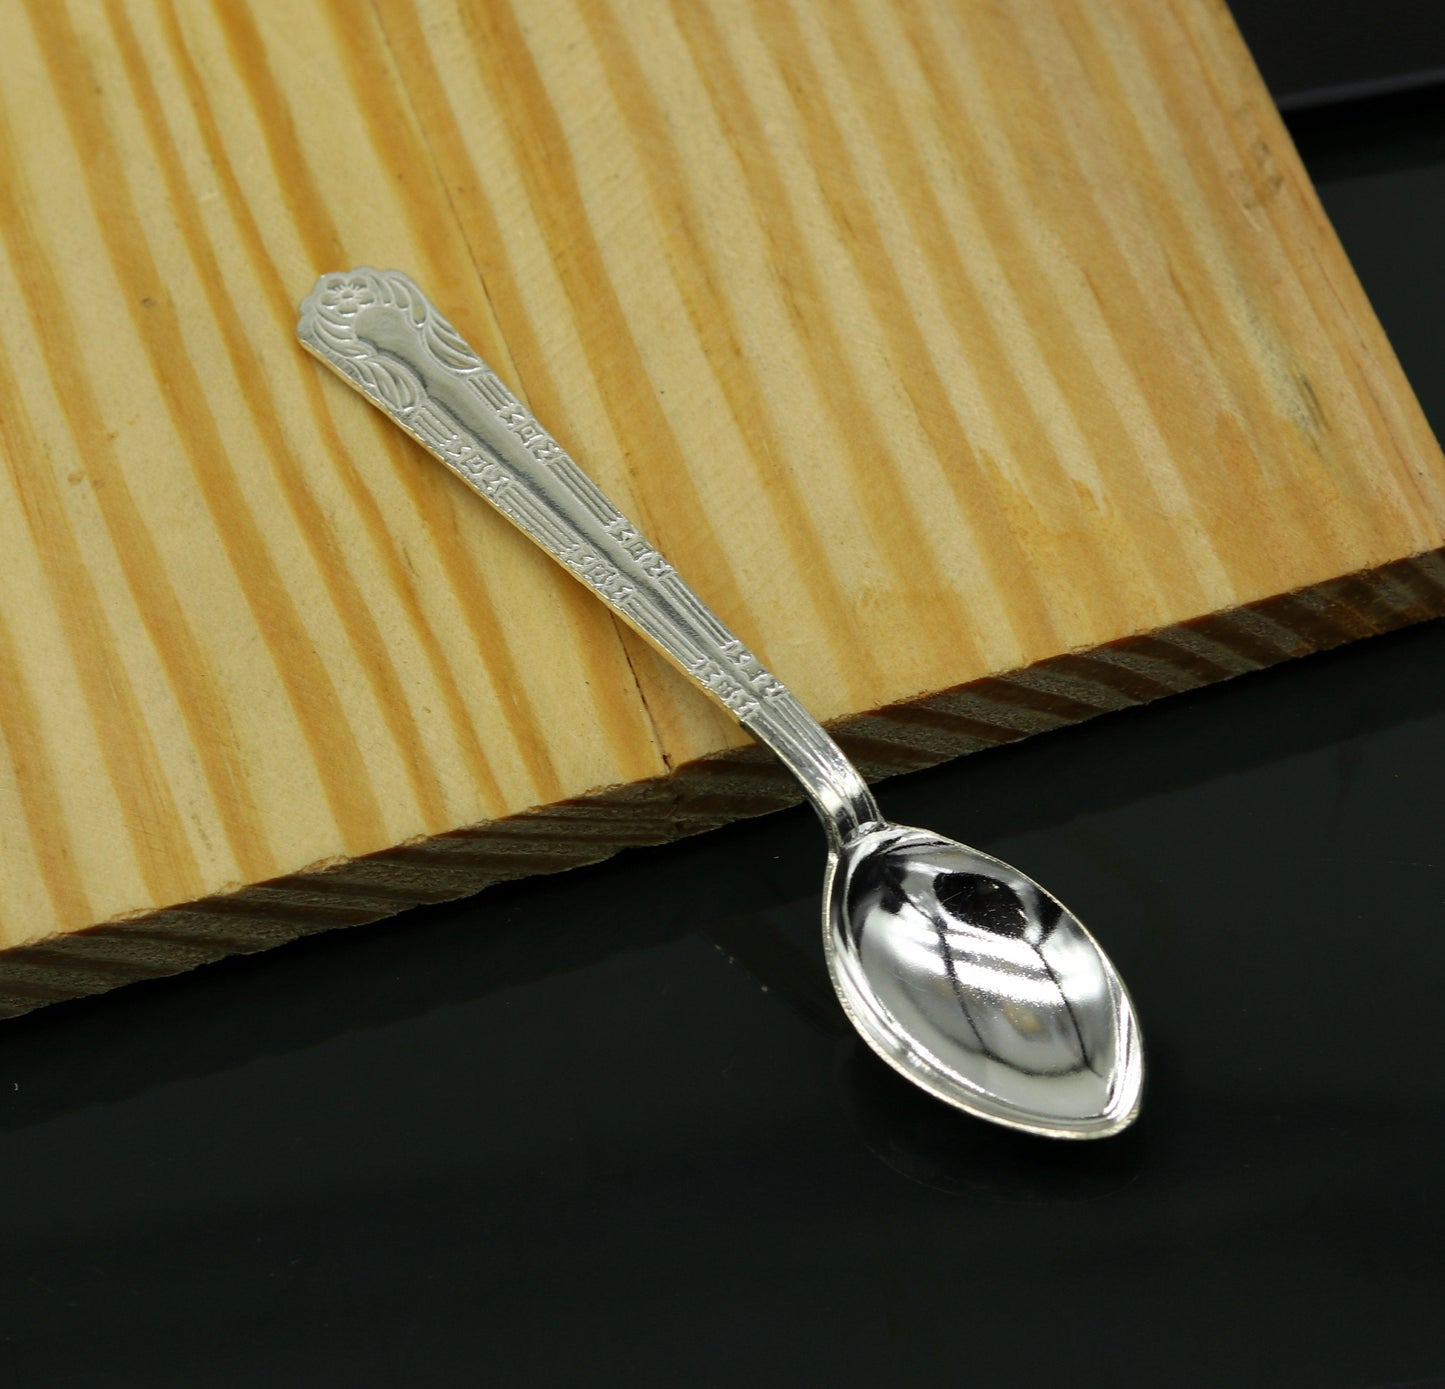 fabulous sterling silver handmade solid silver4.6" spoon kitchen utensils, vessels, silver has antibacterial properties, stay healthy sv60 - TRIBAL ORNAMENTS